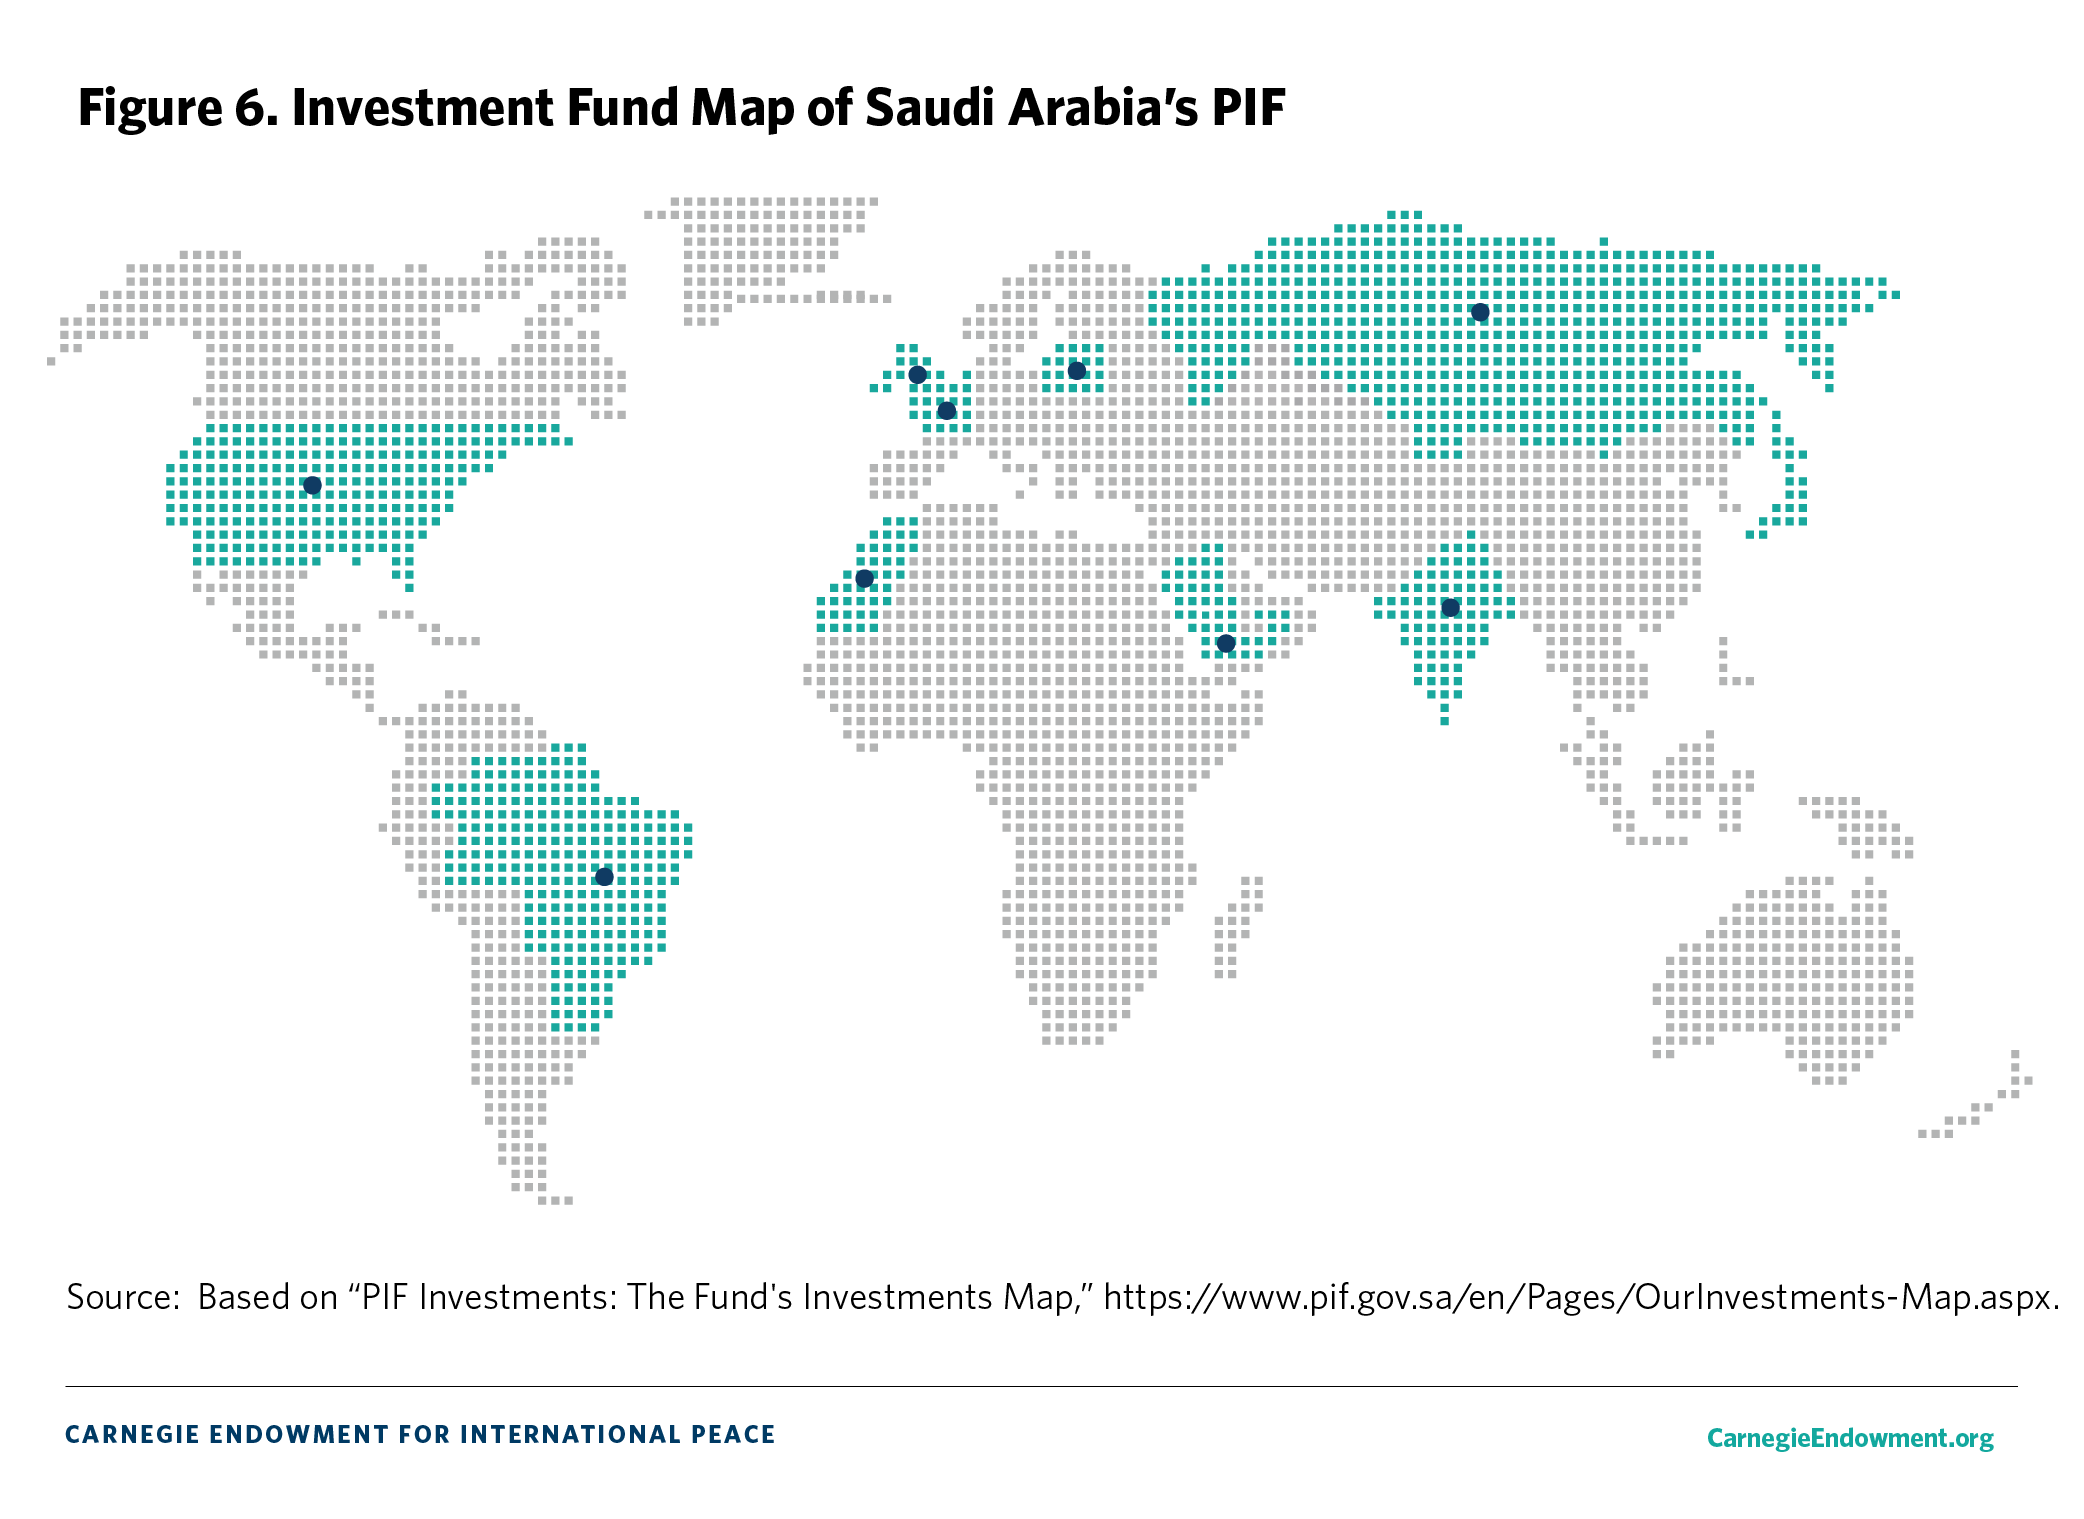 Figure 6: Saudi Arabia's PIF